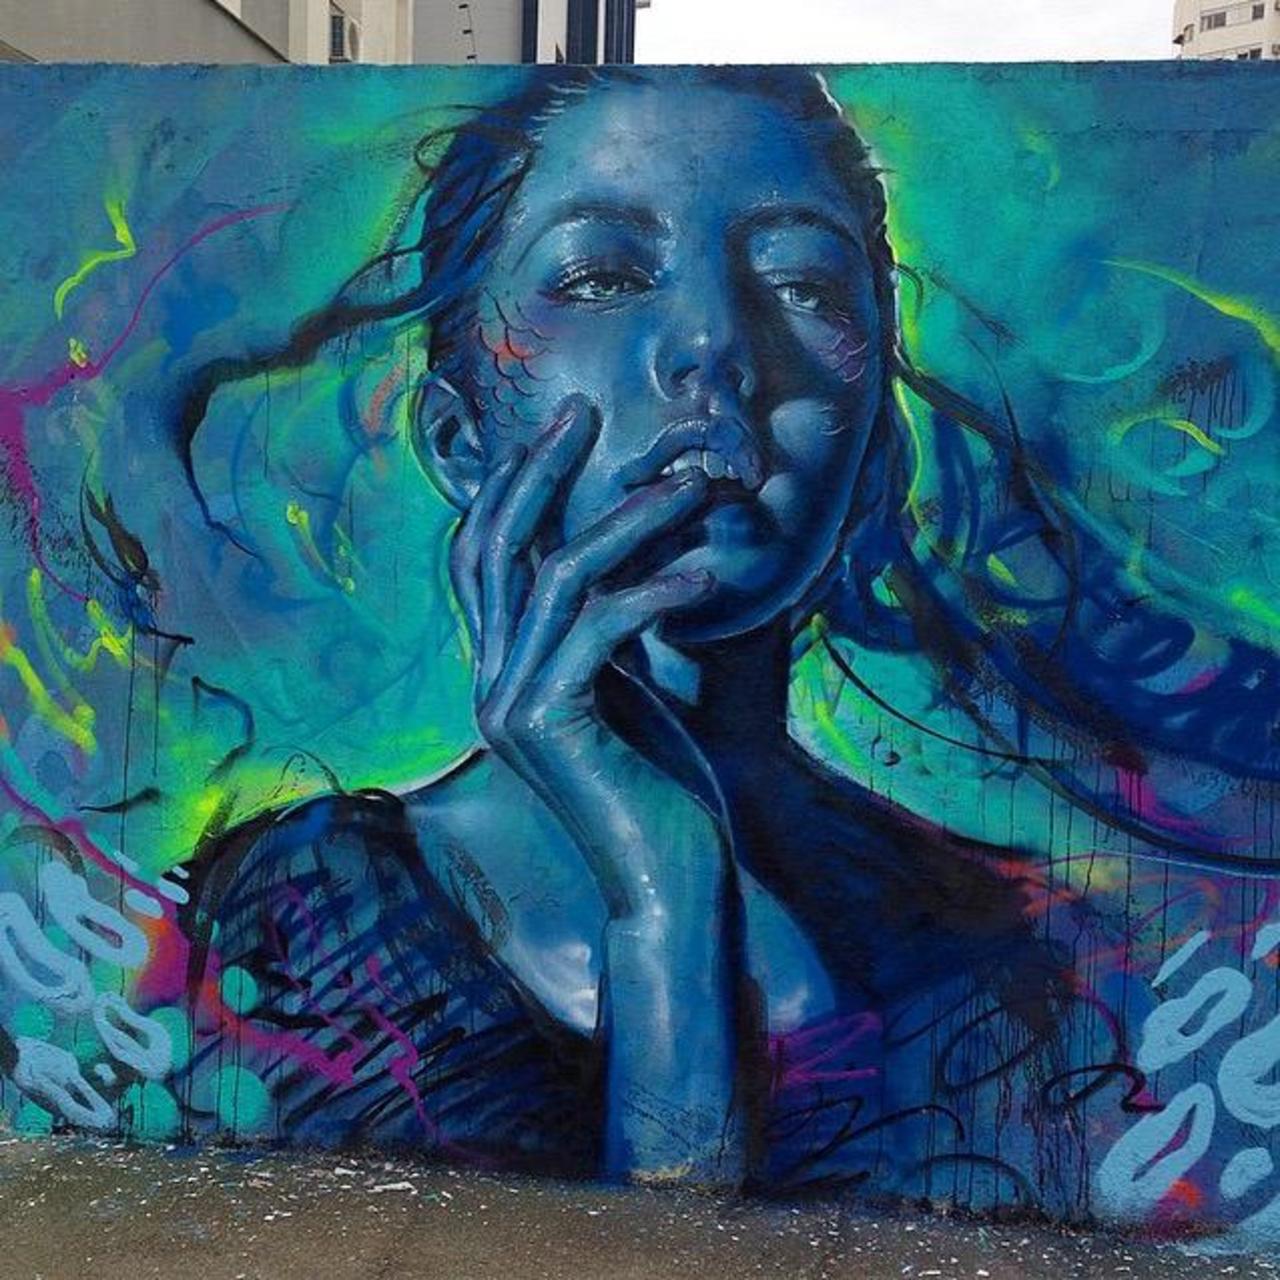 Thiago Valdi new Street Art piece titled 'Day Dreamer' #art #mural #graffiti #streetart http://t.co/3UodbQm48I …… http://twitter.com/charlesjackso14/status/652728504535154689